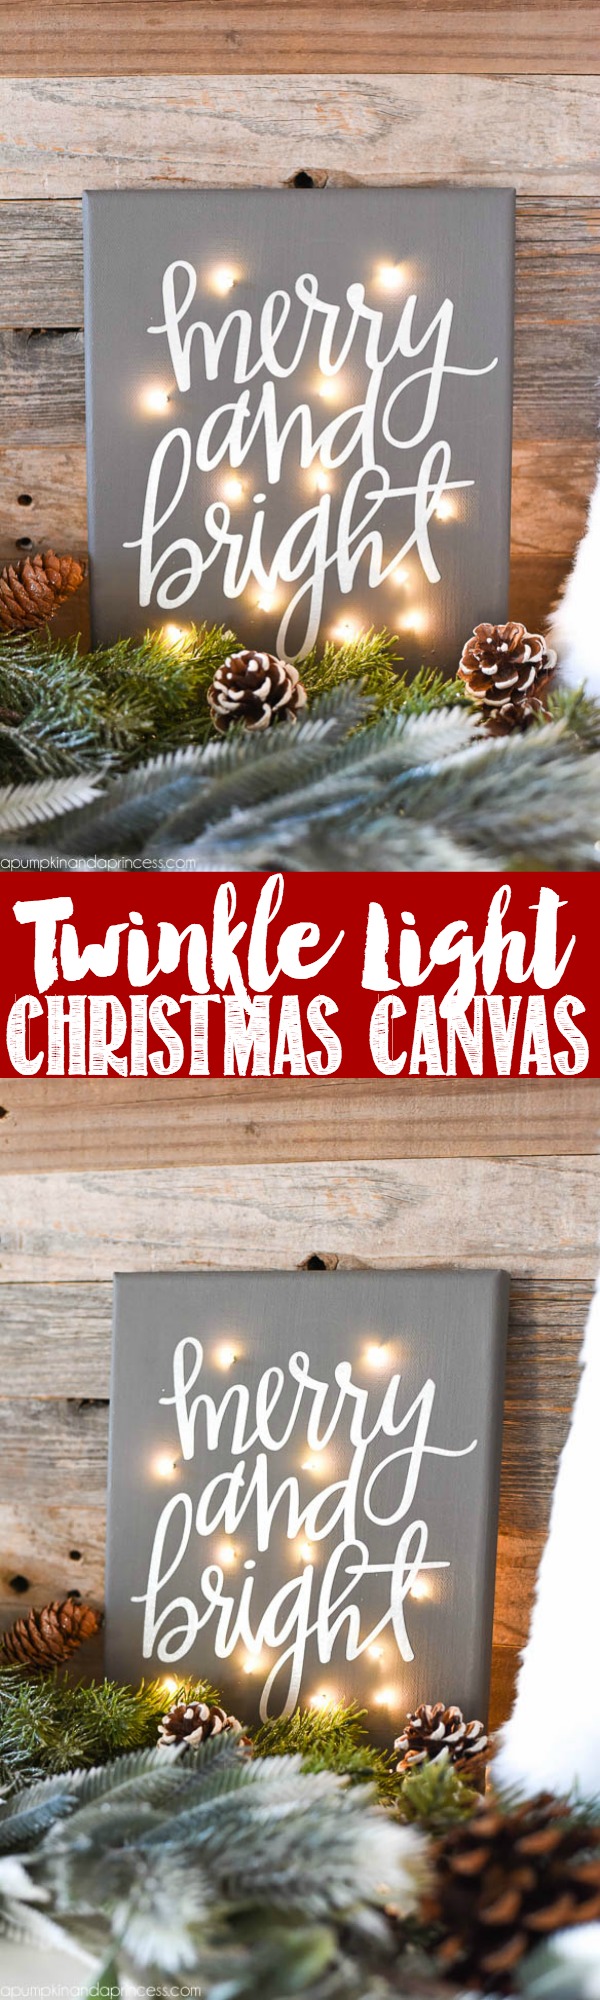 http://apumpkinandaprincess.com/wp-content/uploads/2015/11/DIY-Twinkle-Light-Christmas-Canvas.jpg